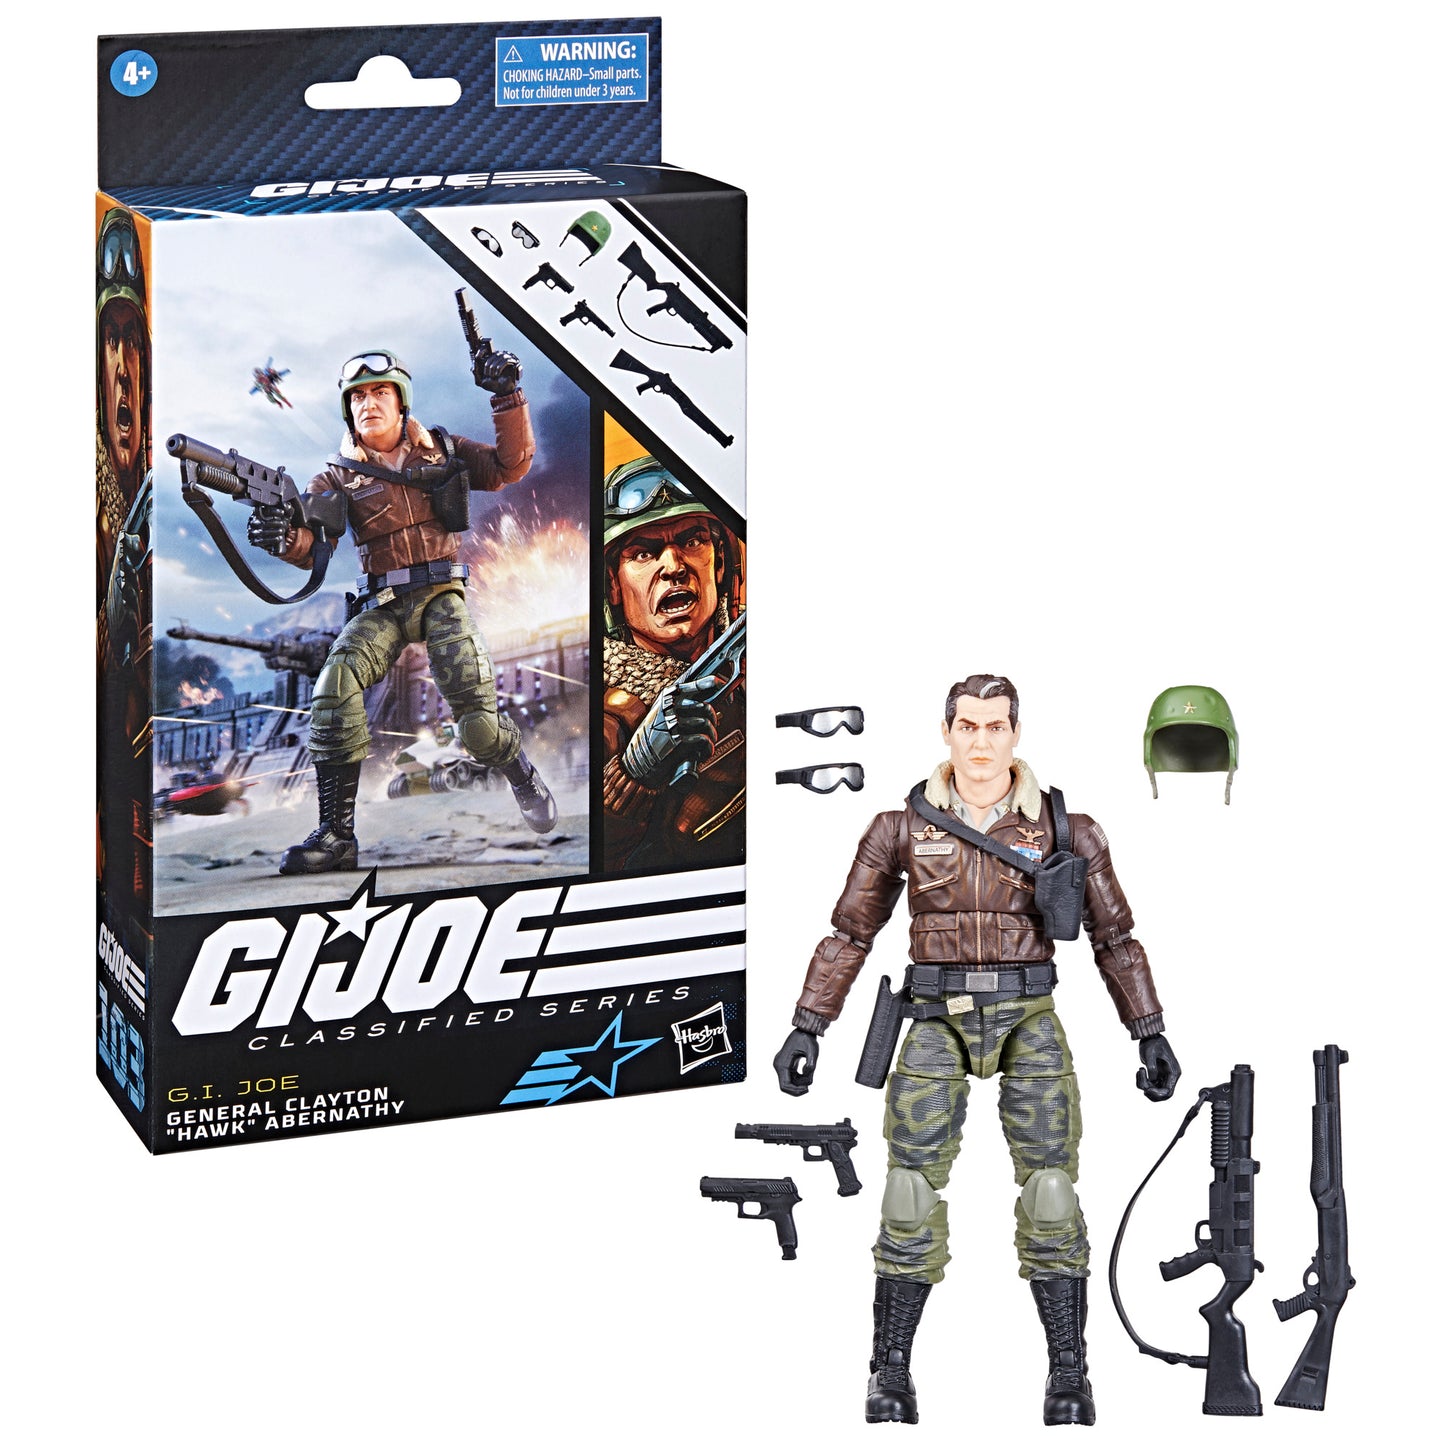 G.I. Joe Classified Series General Clayton "Hawk" Abernathy, Collectible G.I. Joe Action Figure (6"), 103 